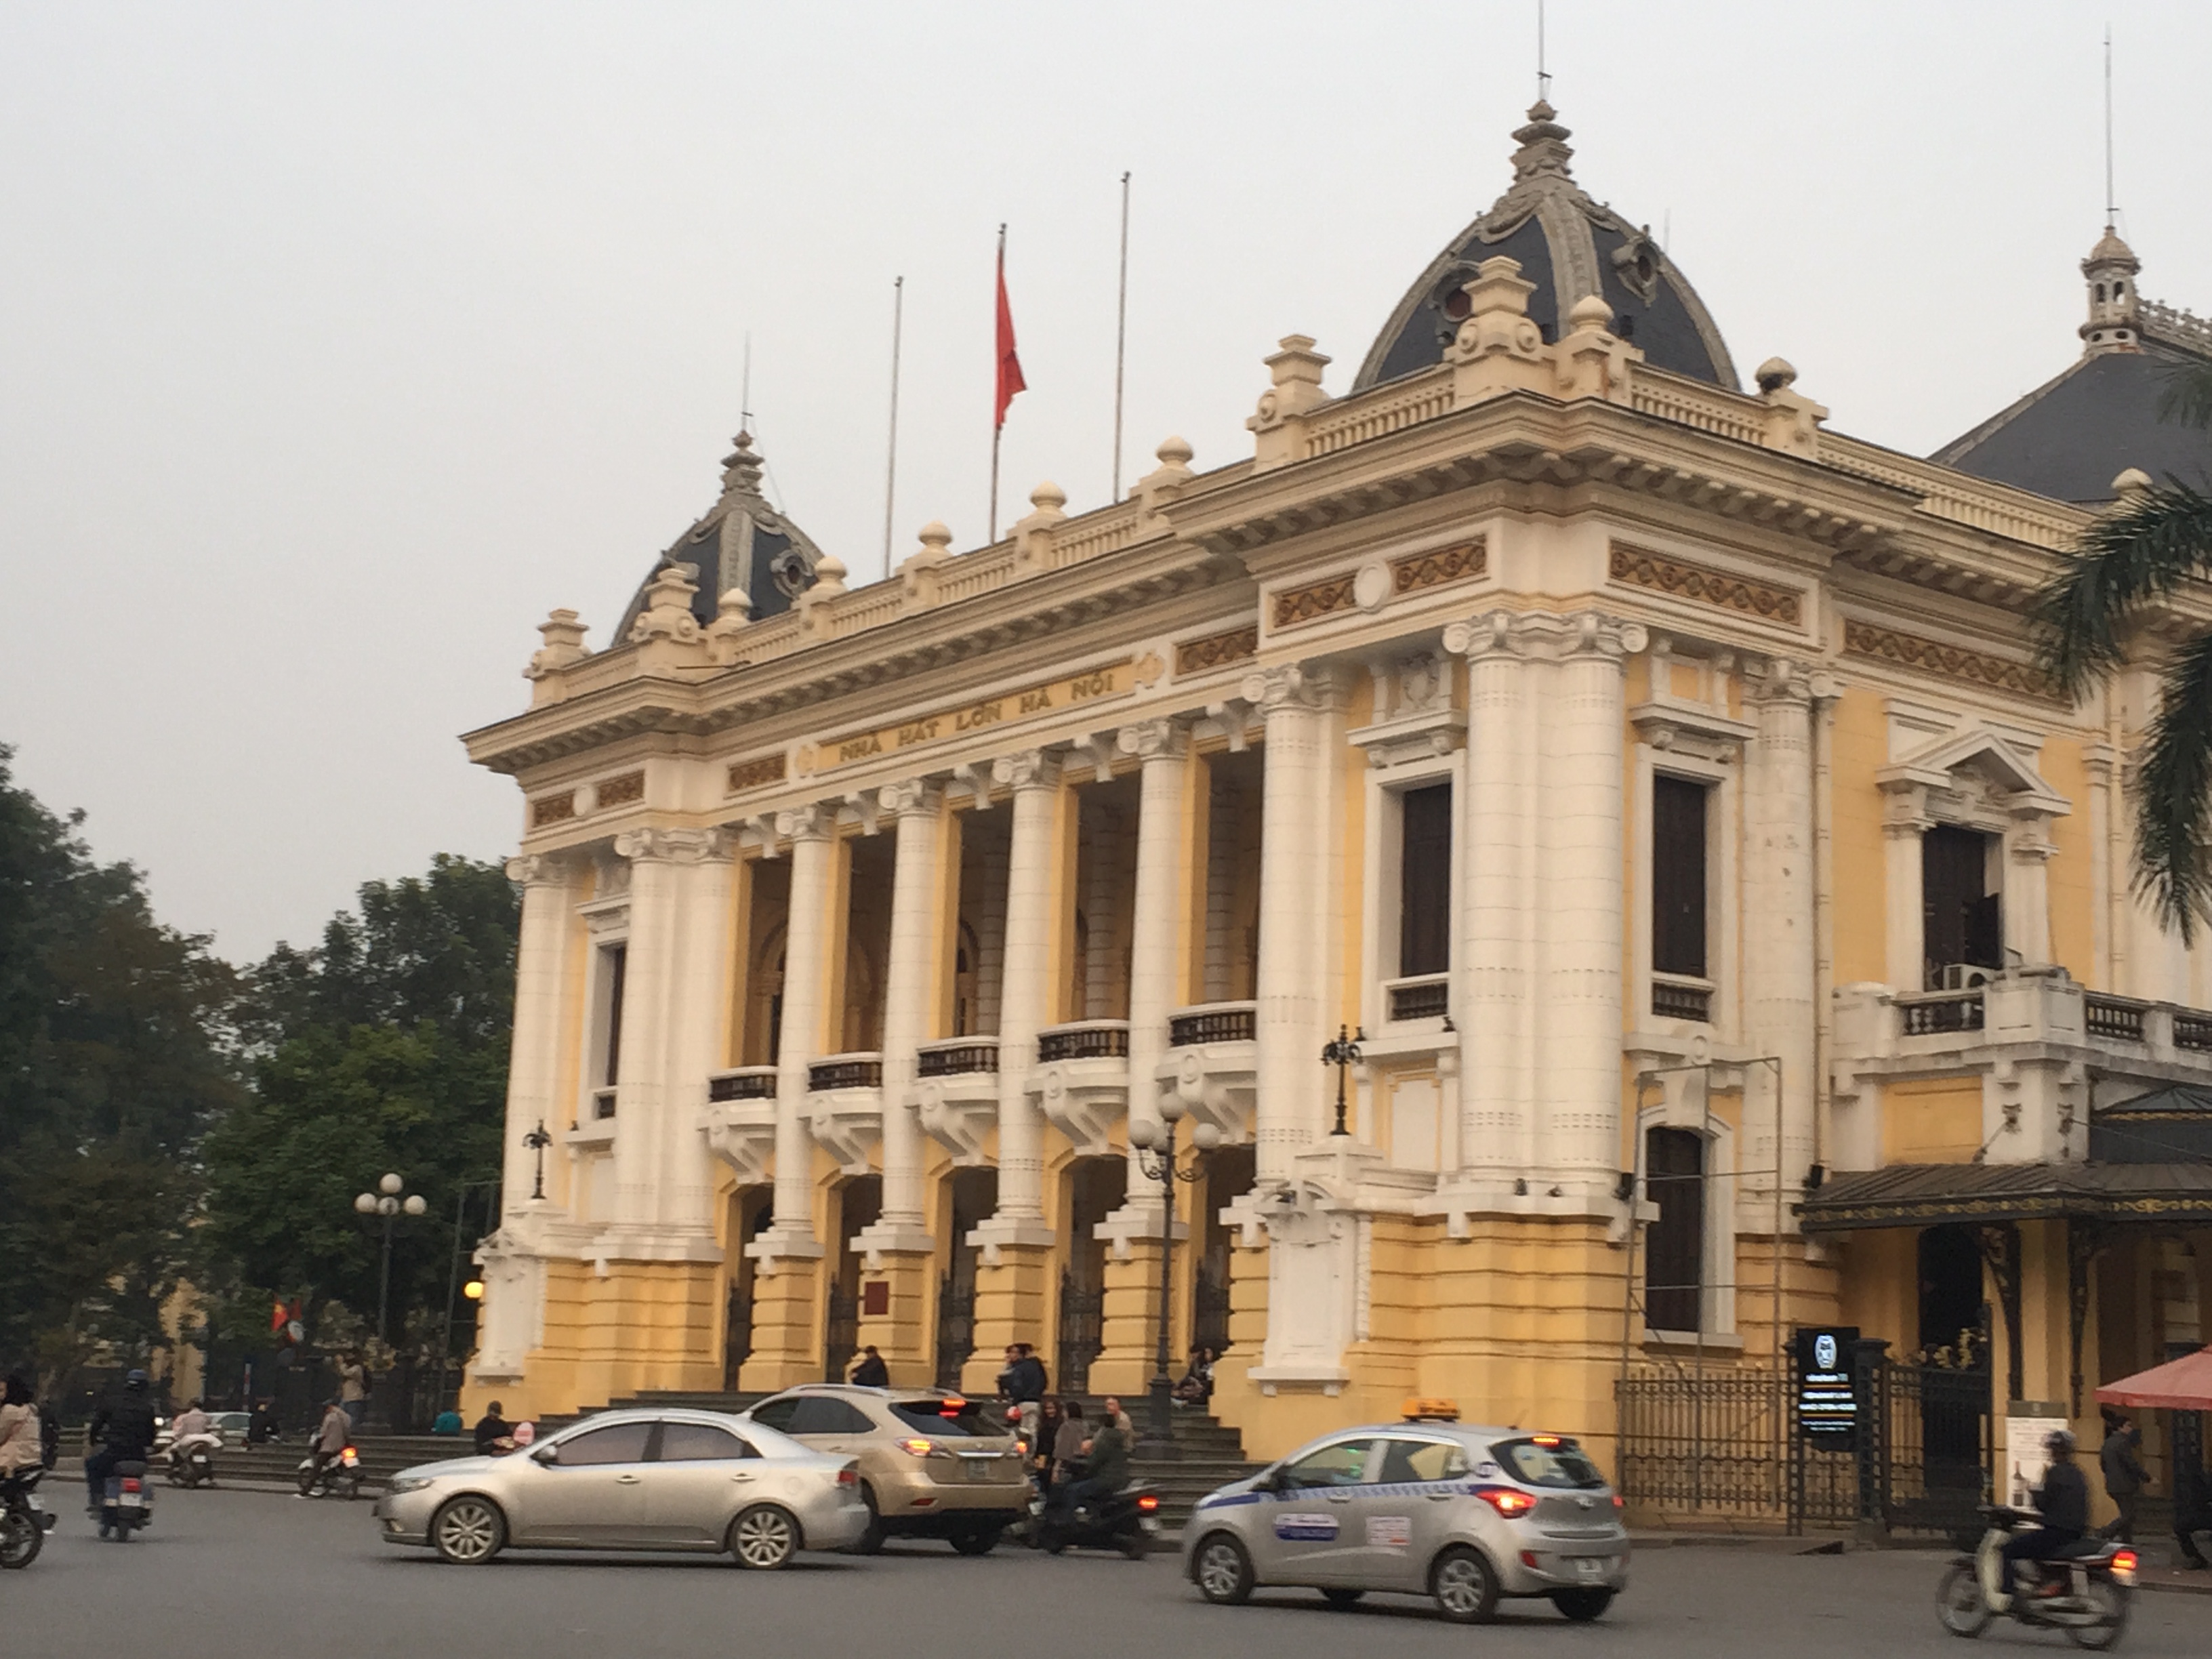 The Opera House in Hanoi